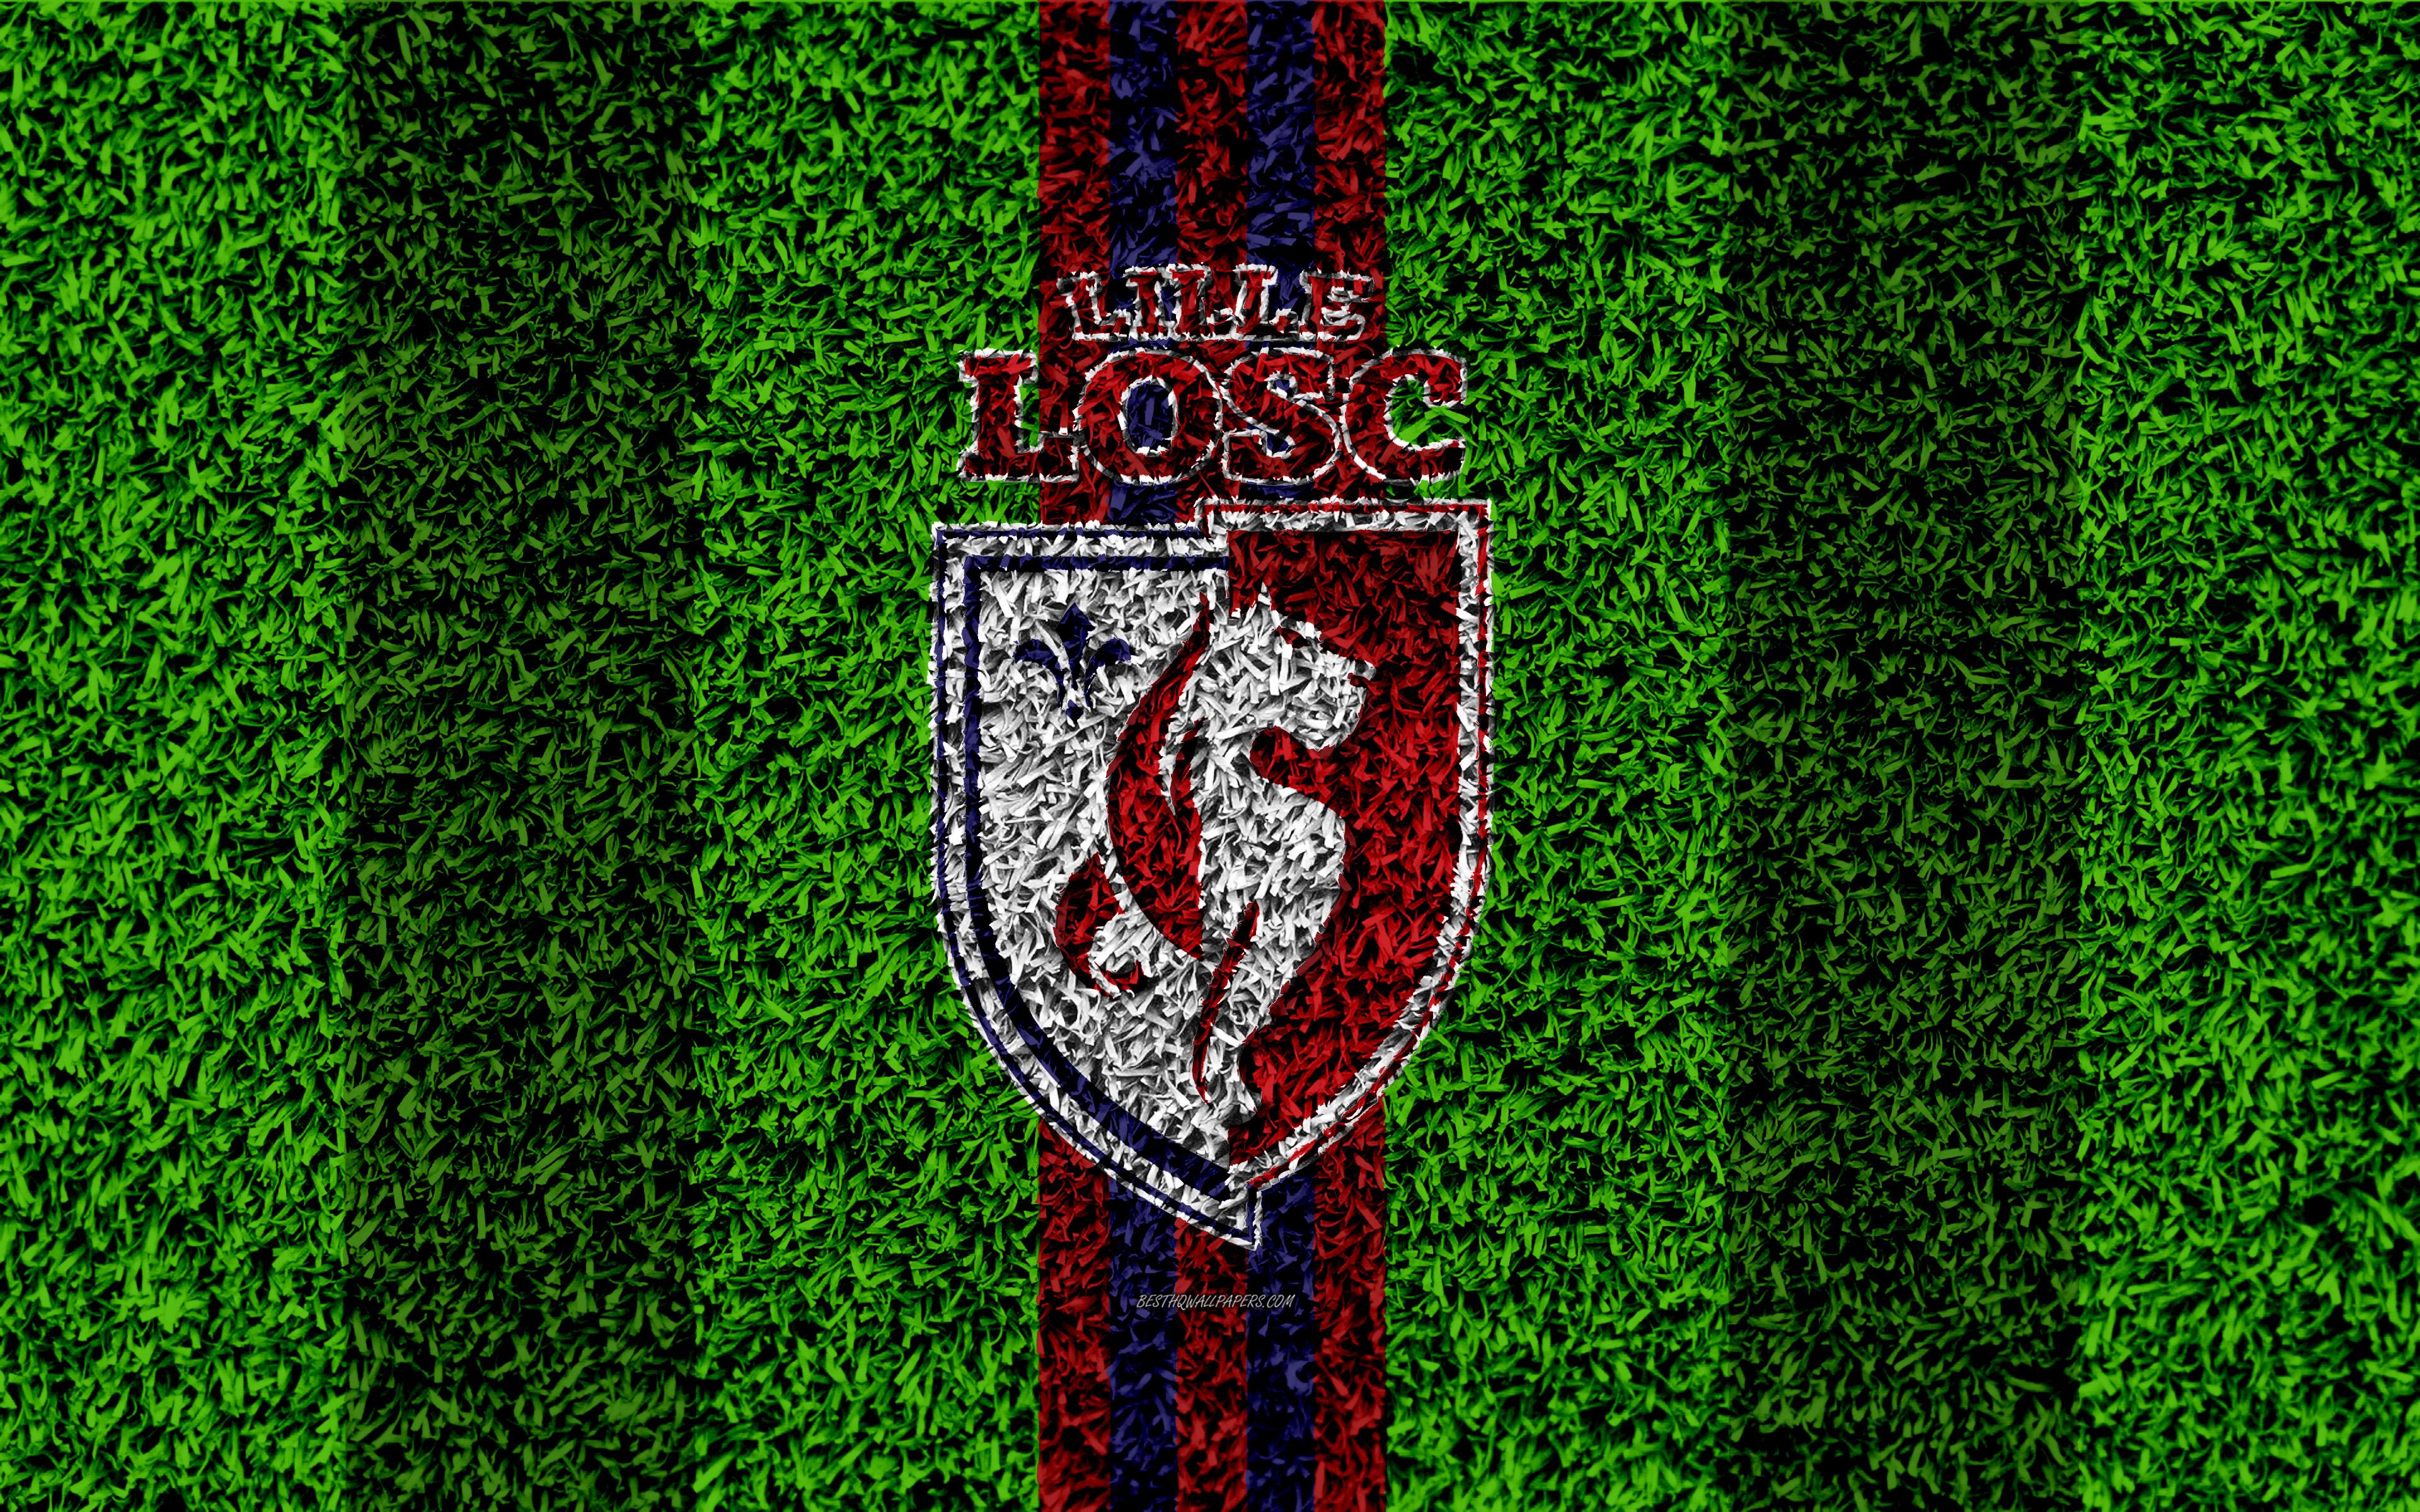 Download wallpaper Lille OSC, 4k, football lawn, logo, French